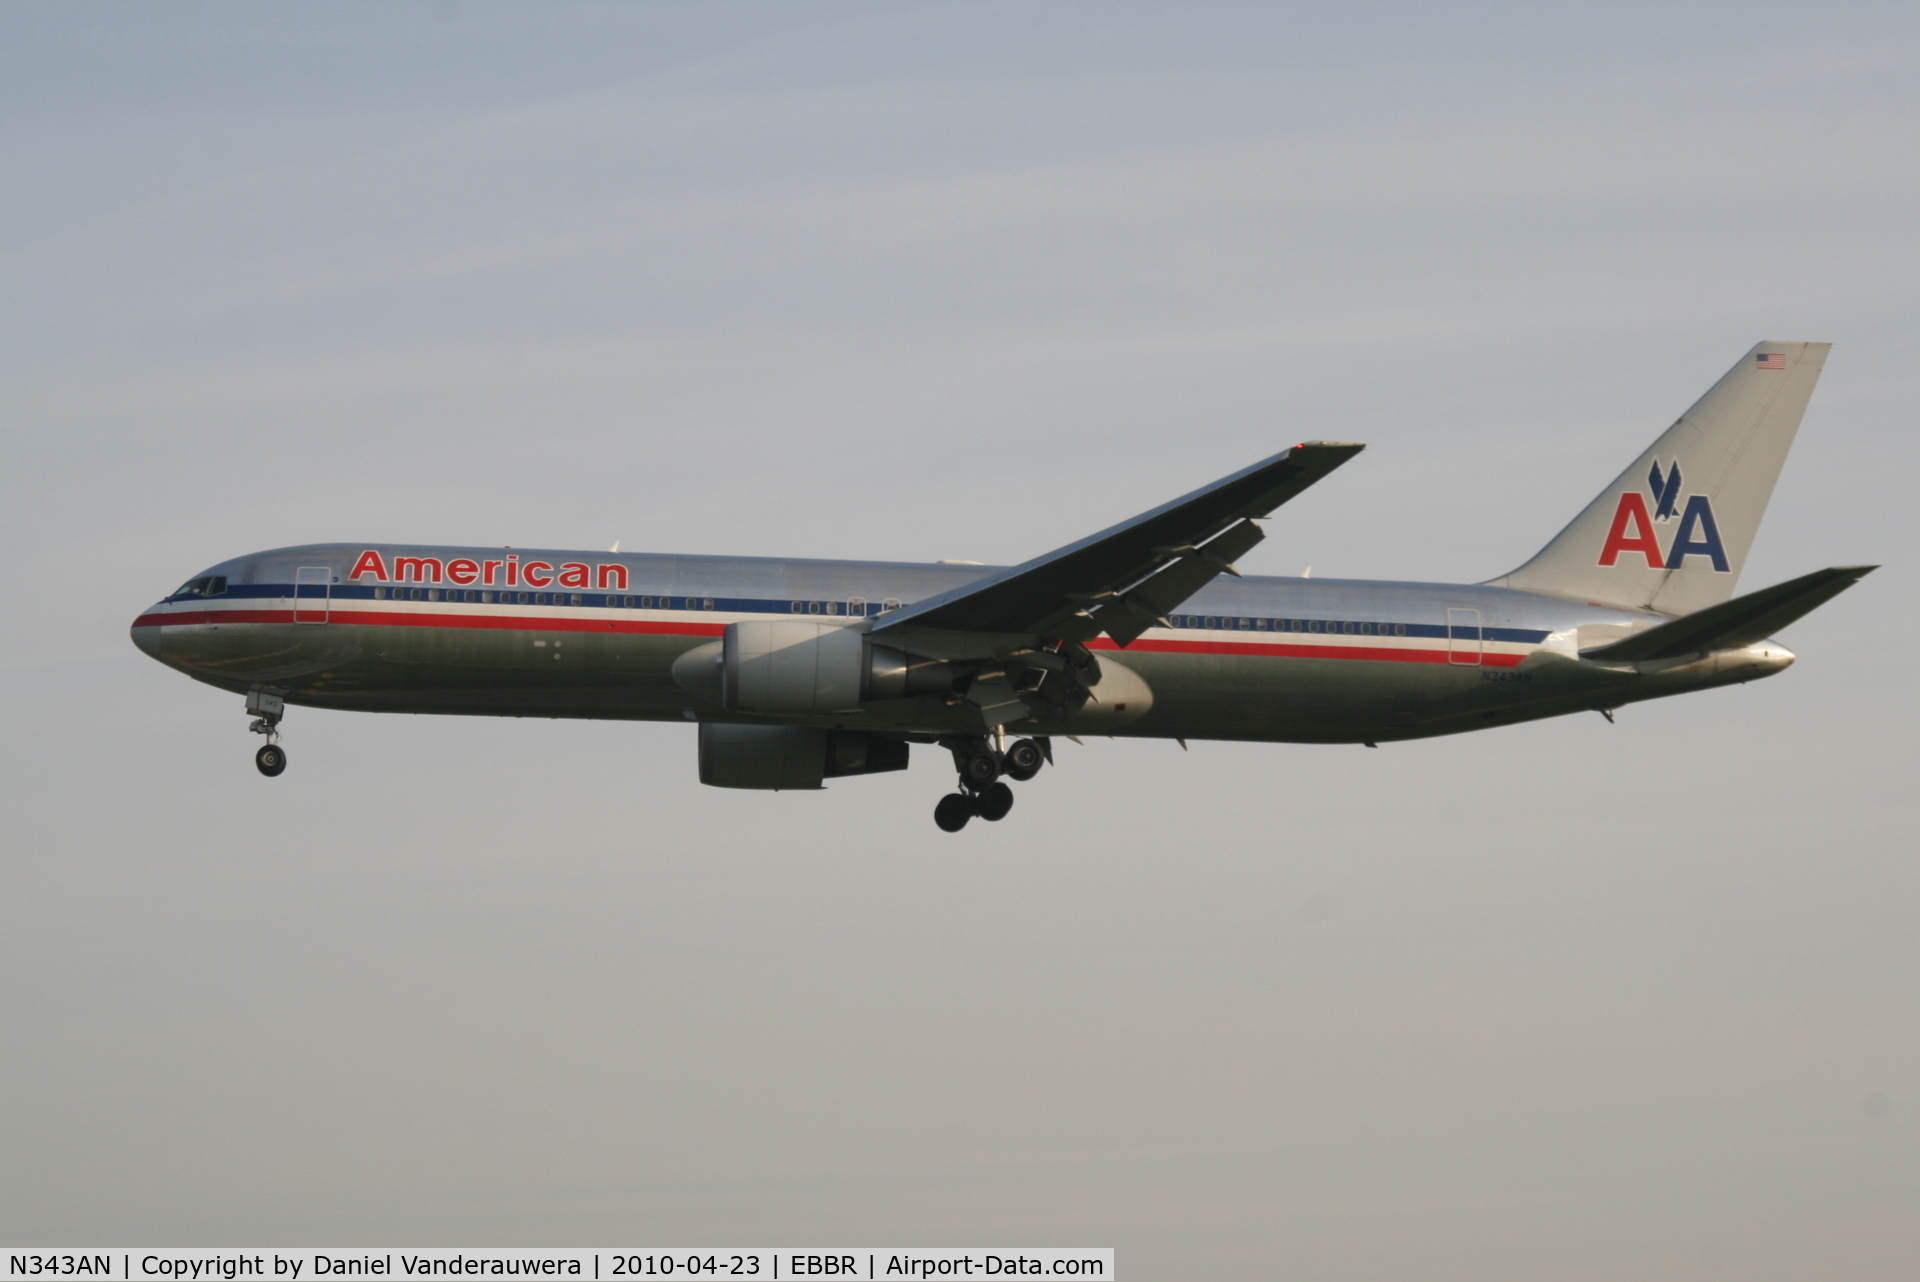 N343AN, 2003 Boeing 767-323 C/N 33082, Arrival of flight AA088 to RWY 25L